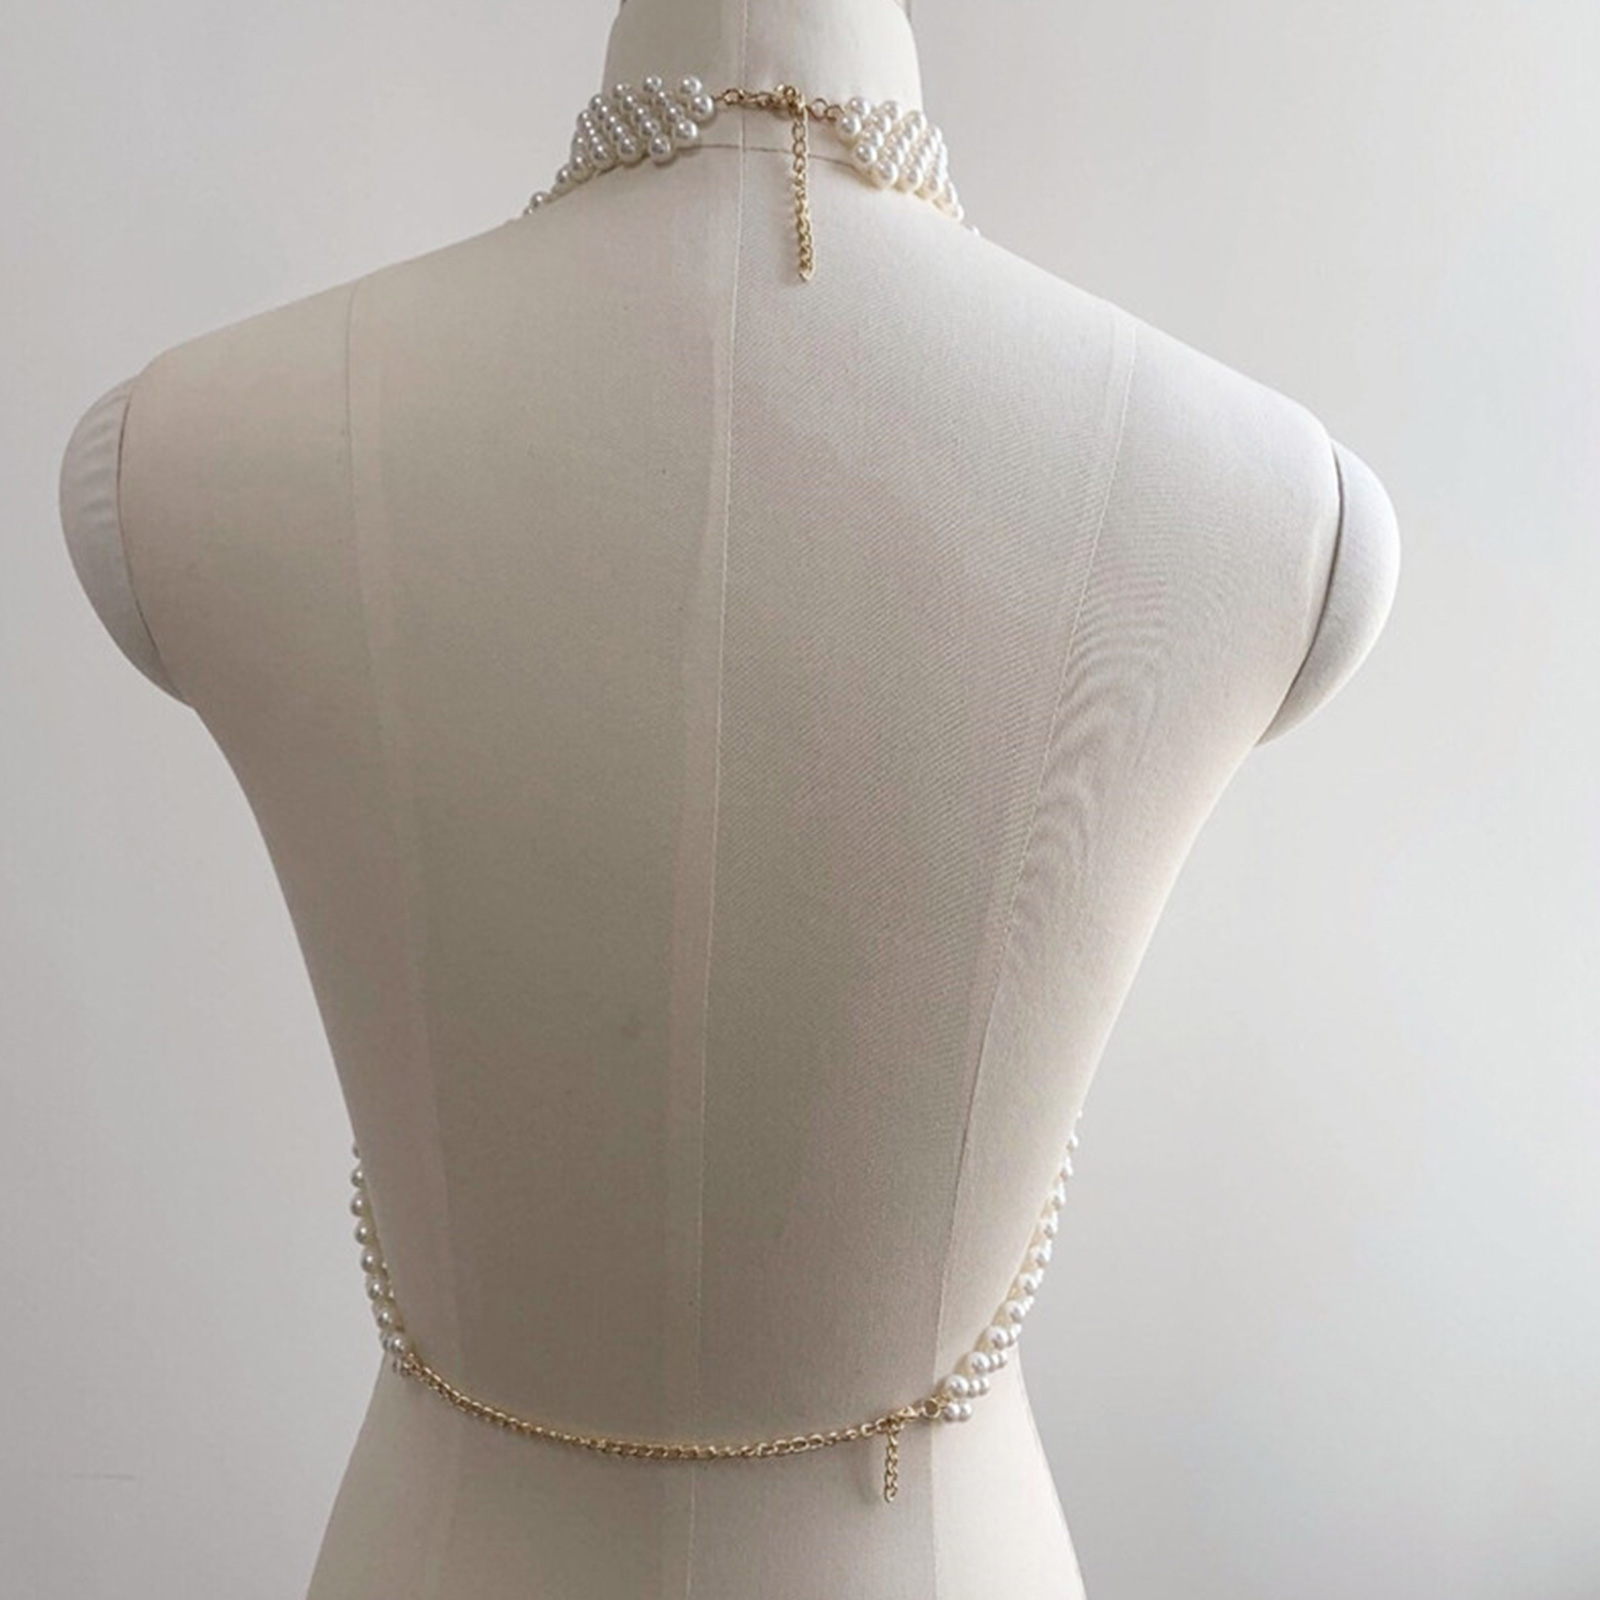 CHAOMA Women Layered Pearl Body Chain Choker Necklace Harness Sexy Bikini Body Jewelry - image 4 of 11